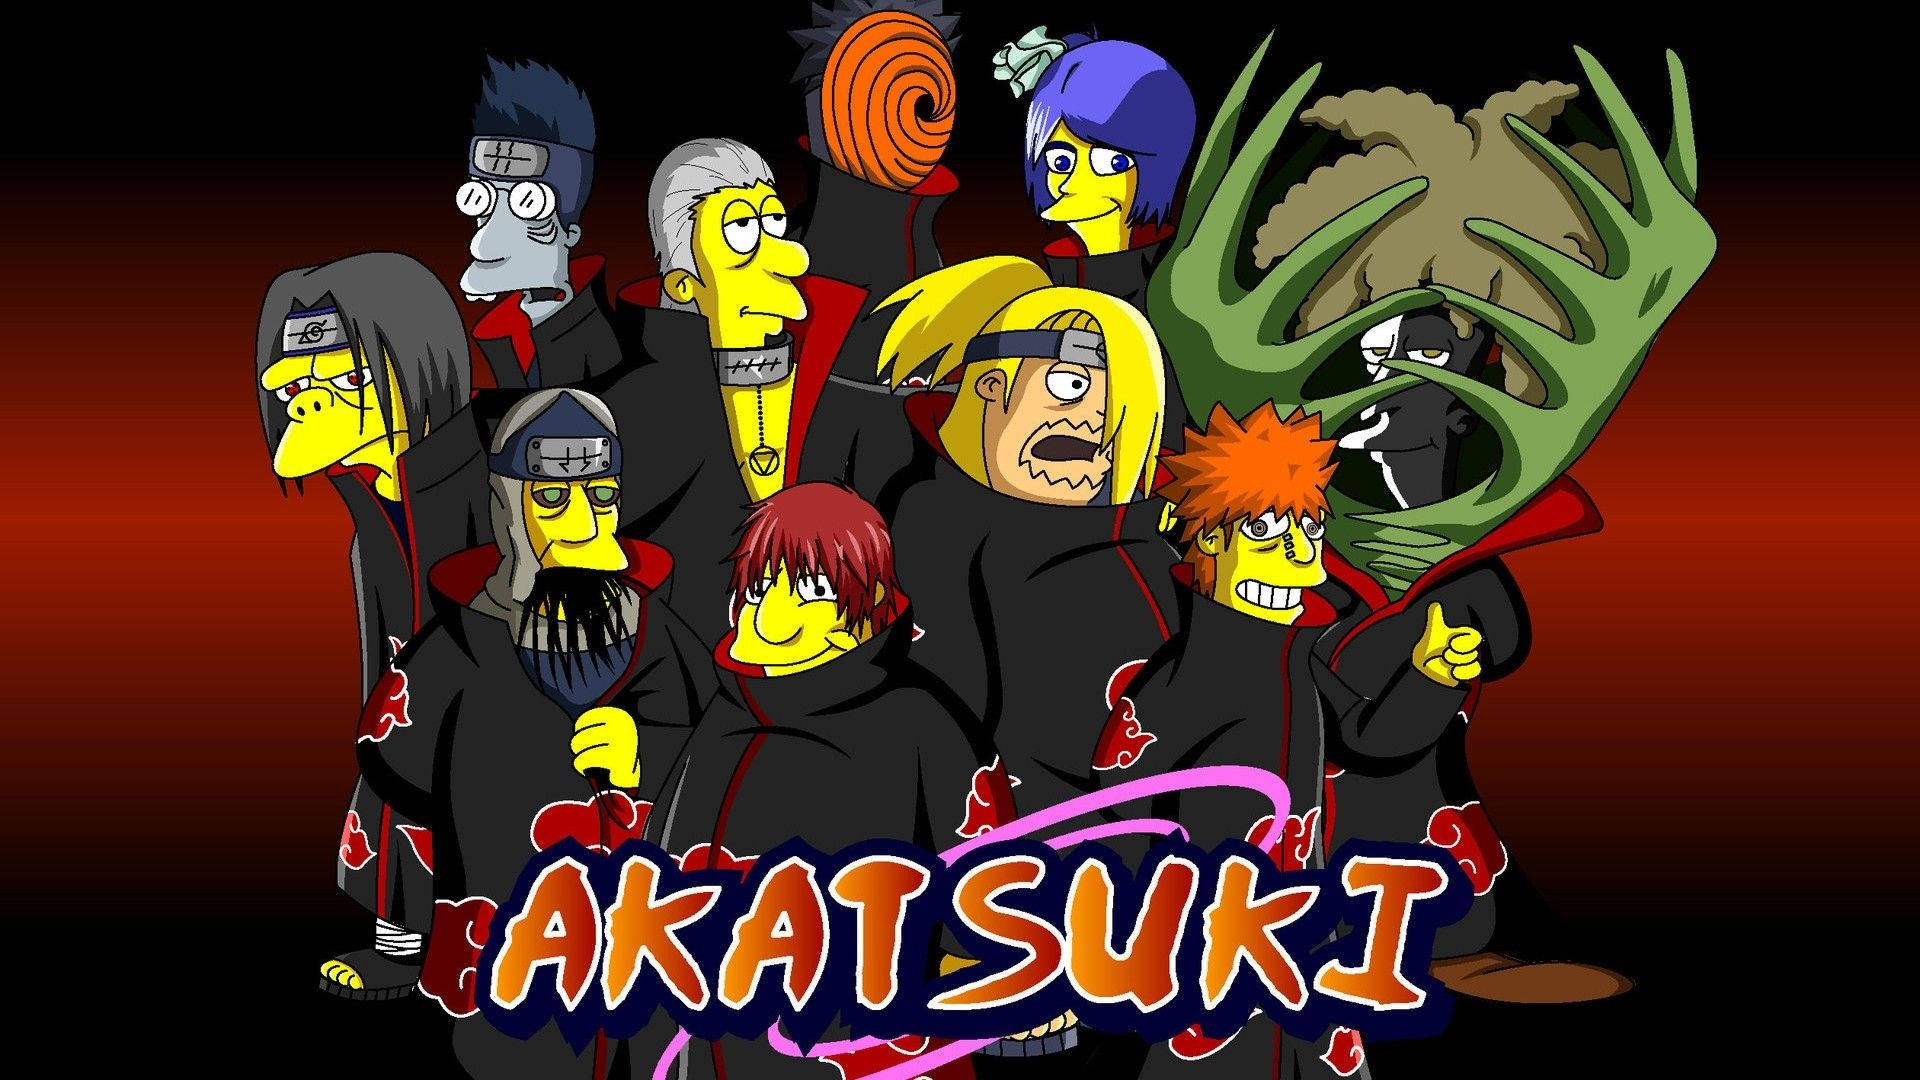 The Akatsuki in Simpsons style Wallpaper